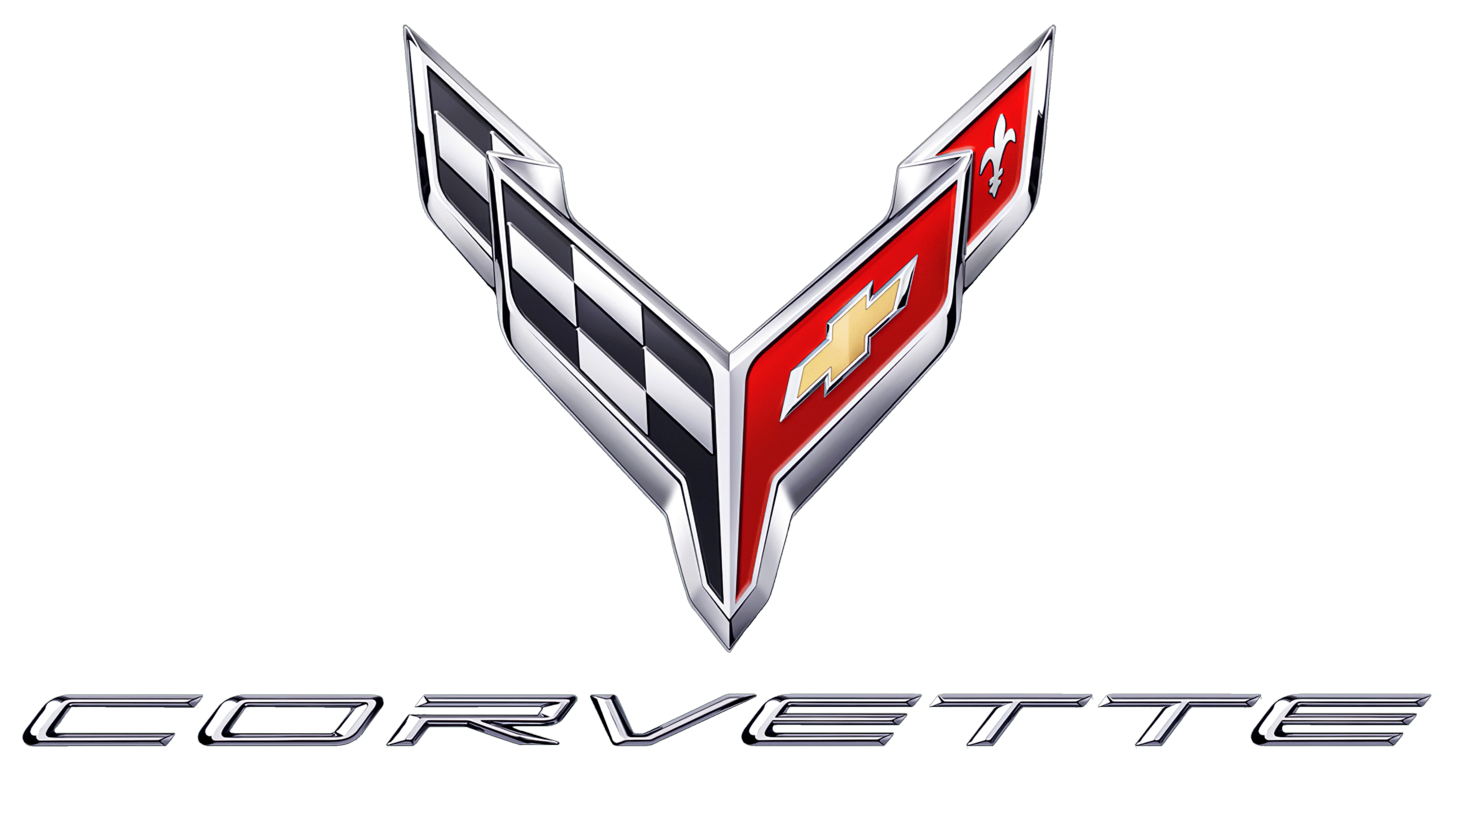 Corvette sign 2019 present